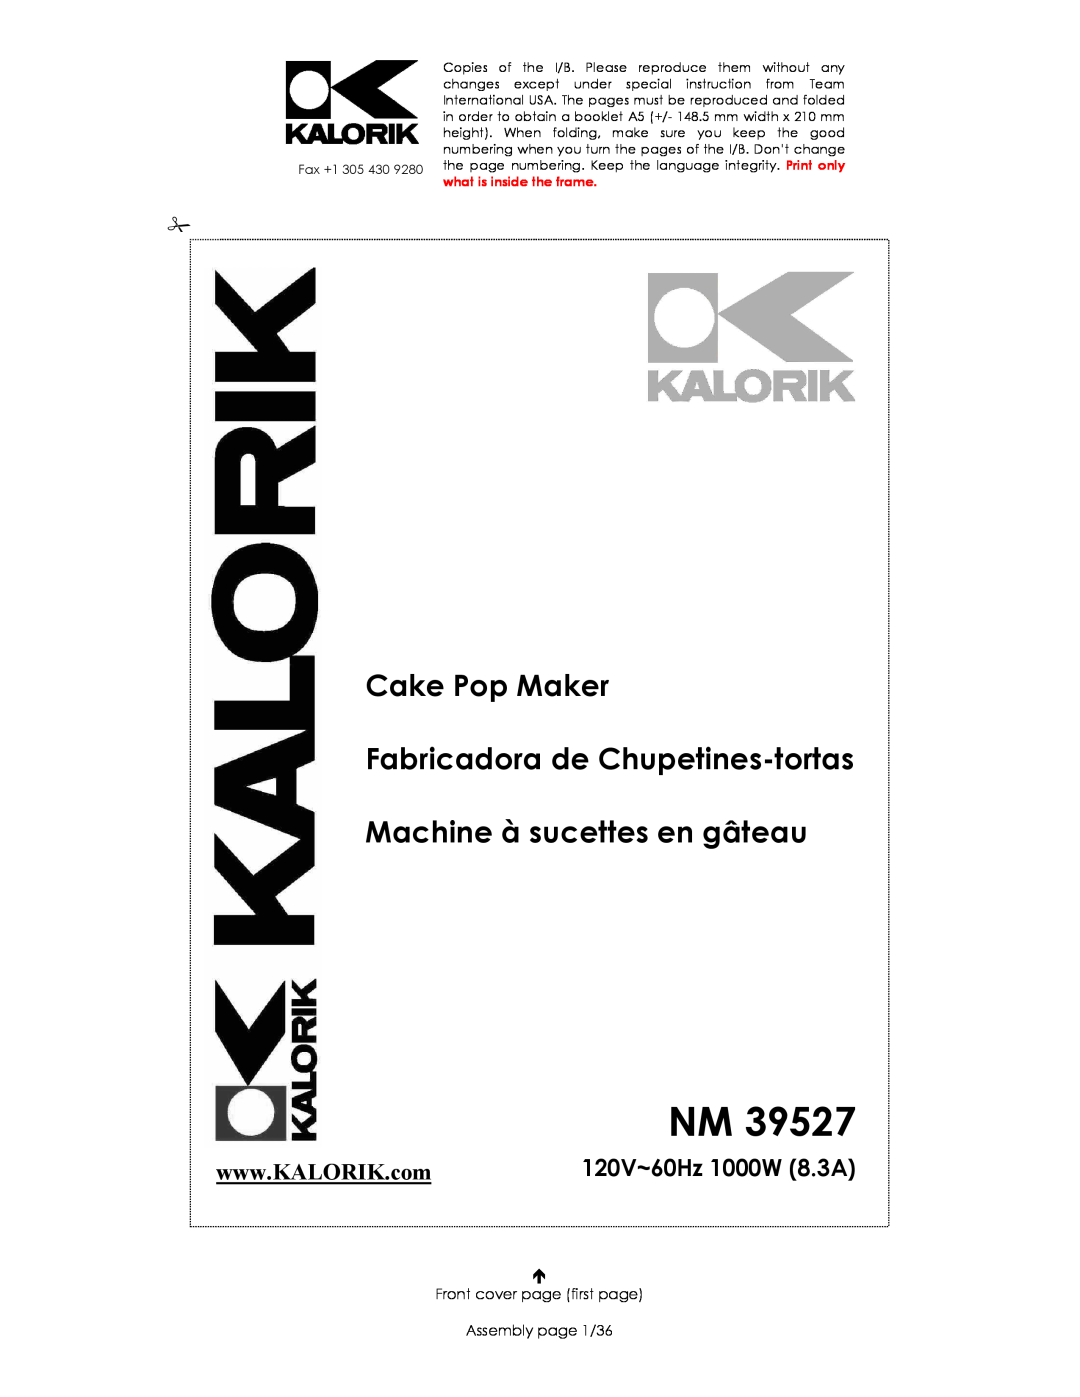 Kalorik NM 39527 manual Cake Pop Maker Fabricadora de Chupetines-tortas, Machine à sucettes en gâteau 